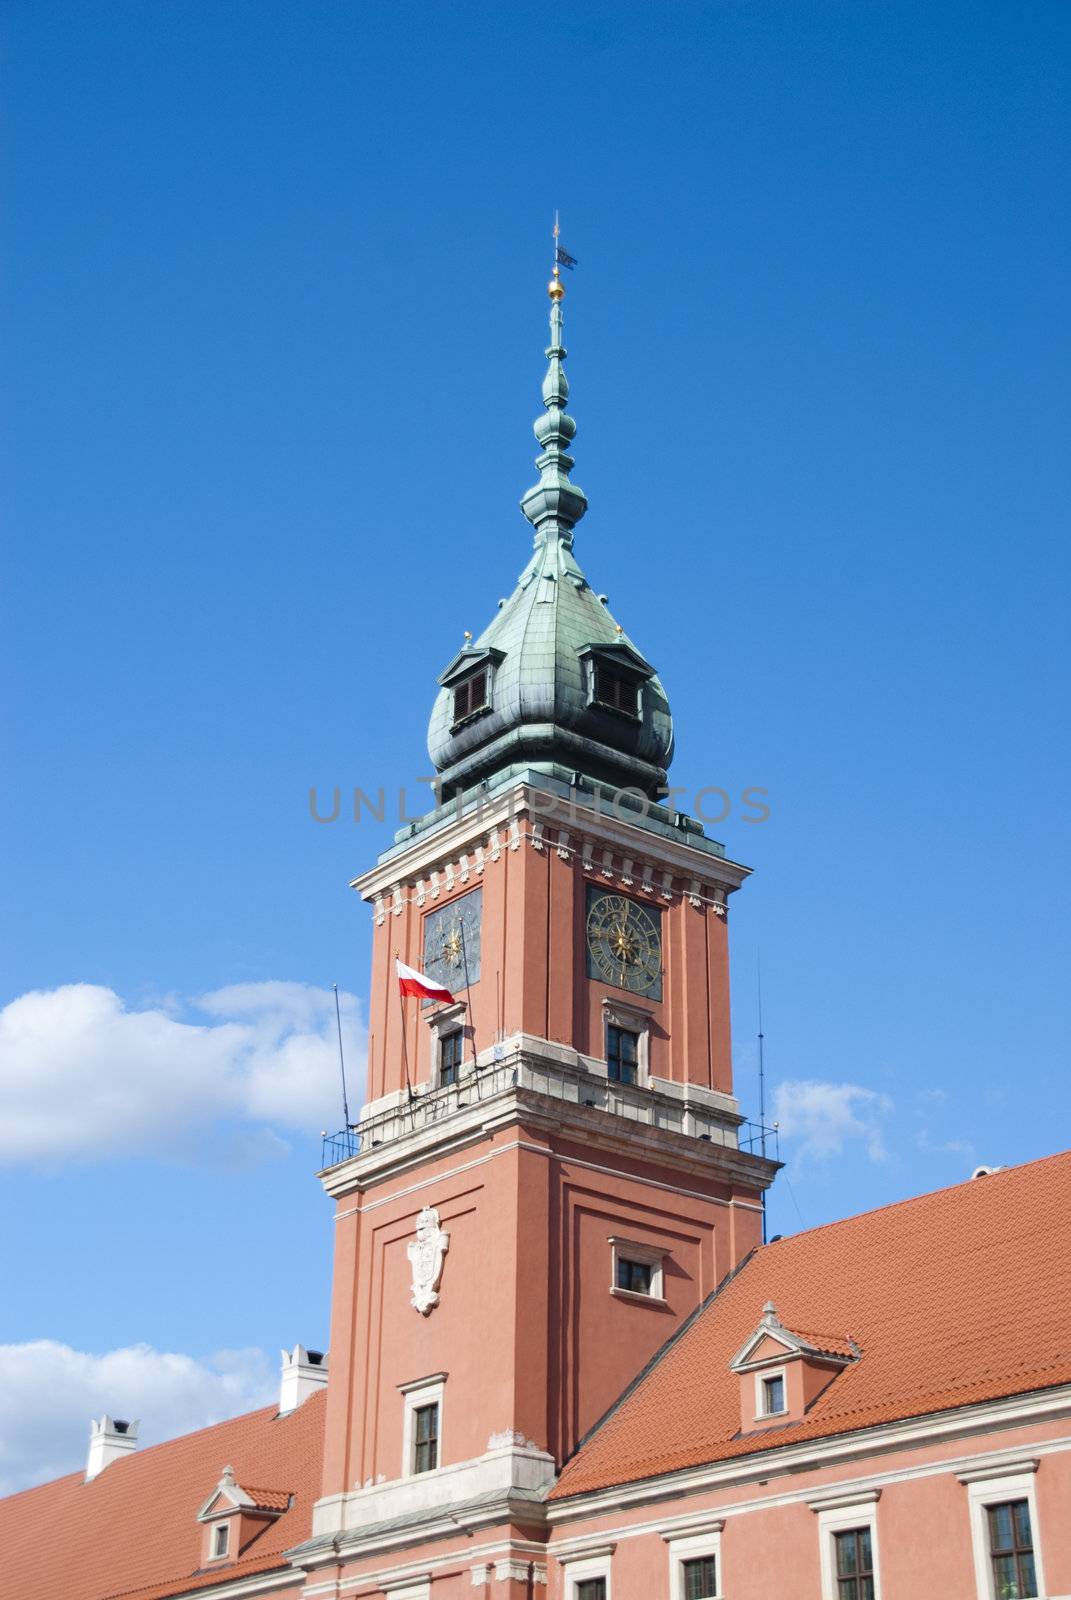 The clocktower of the Royal Palac